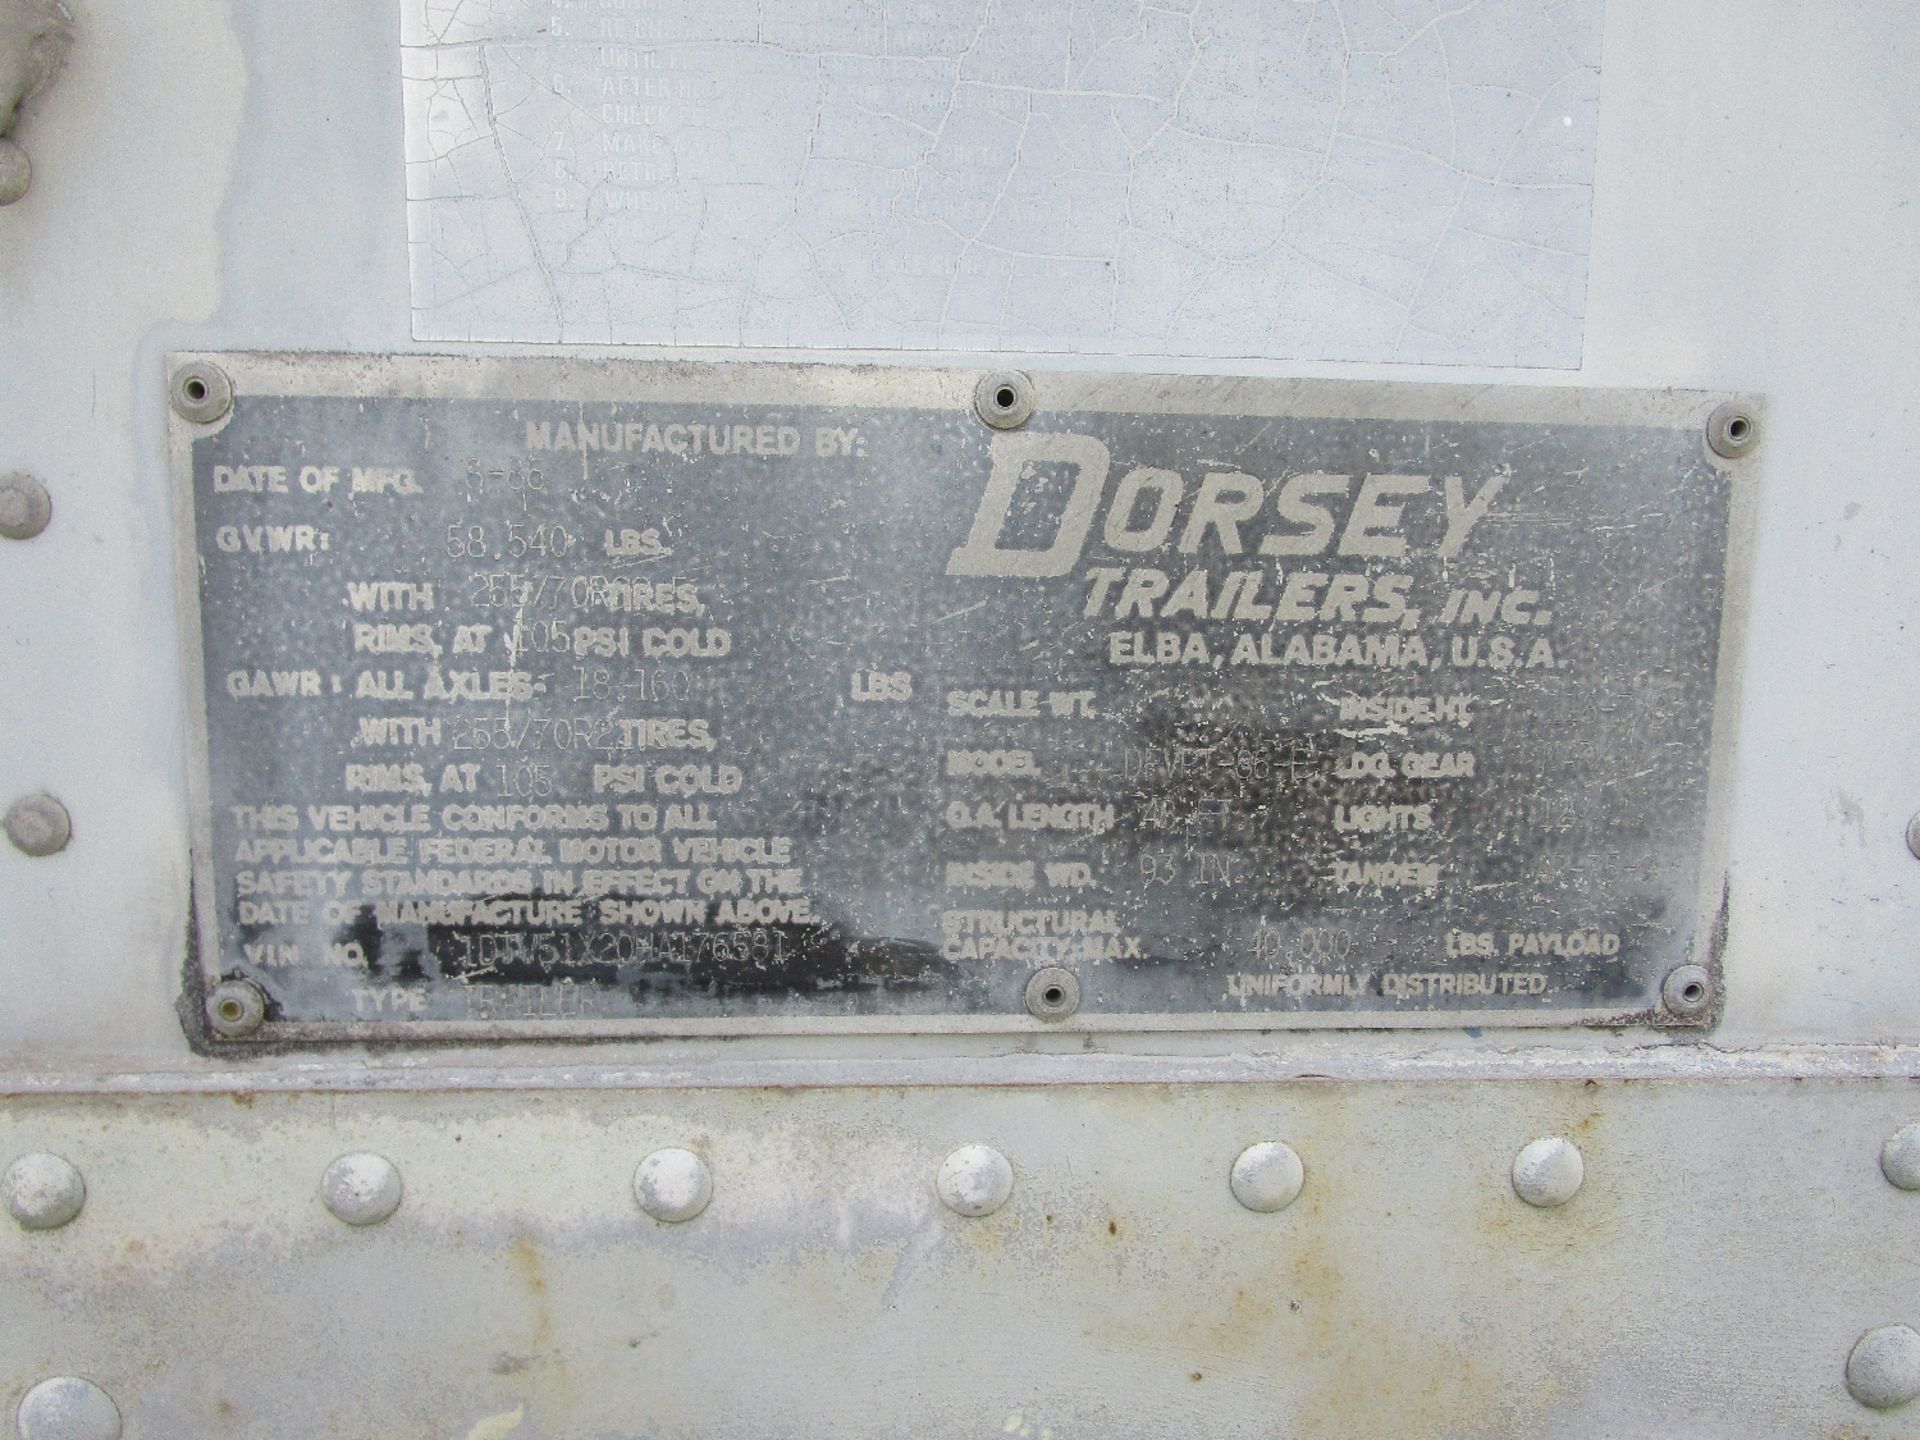 1986 Dorsey Trailer DFVPT-86-E 48' Van Trailer - Image 2 of 4